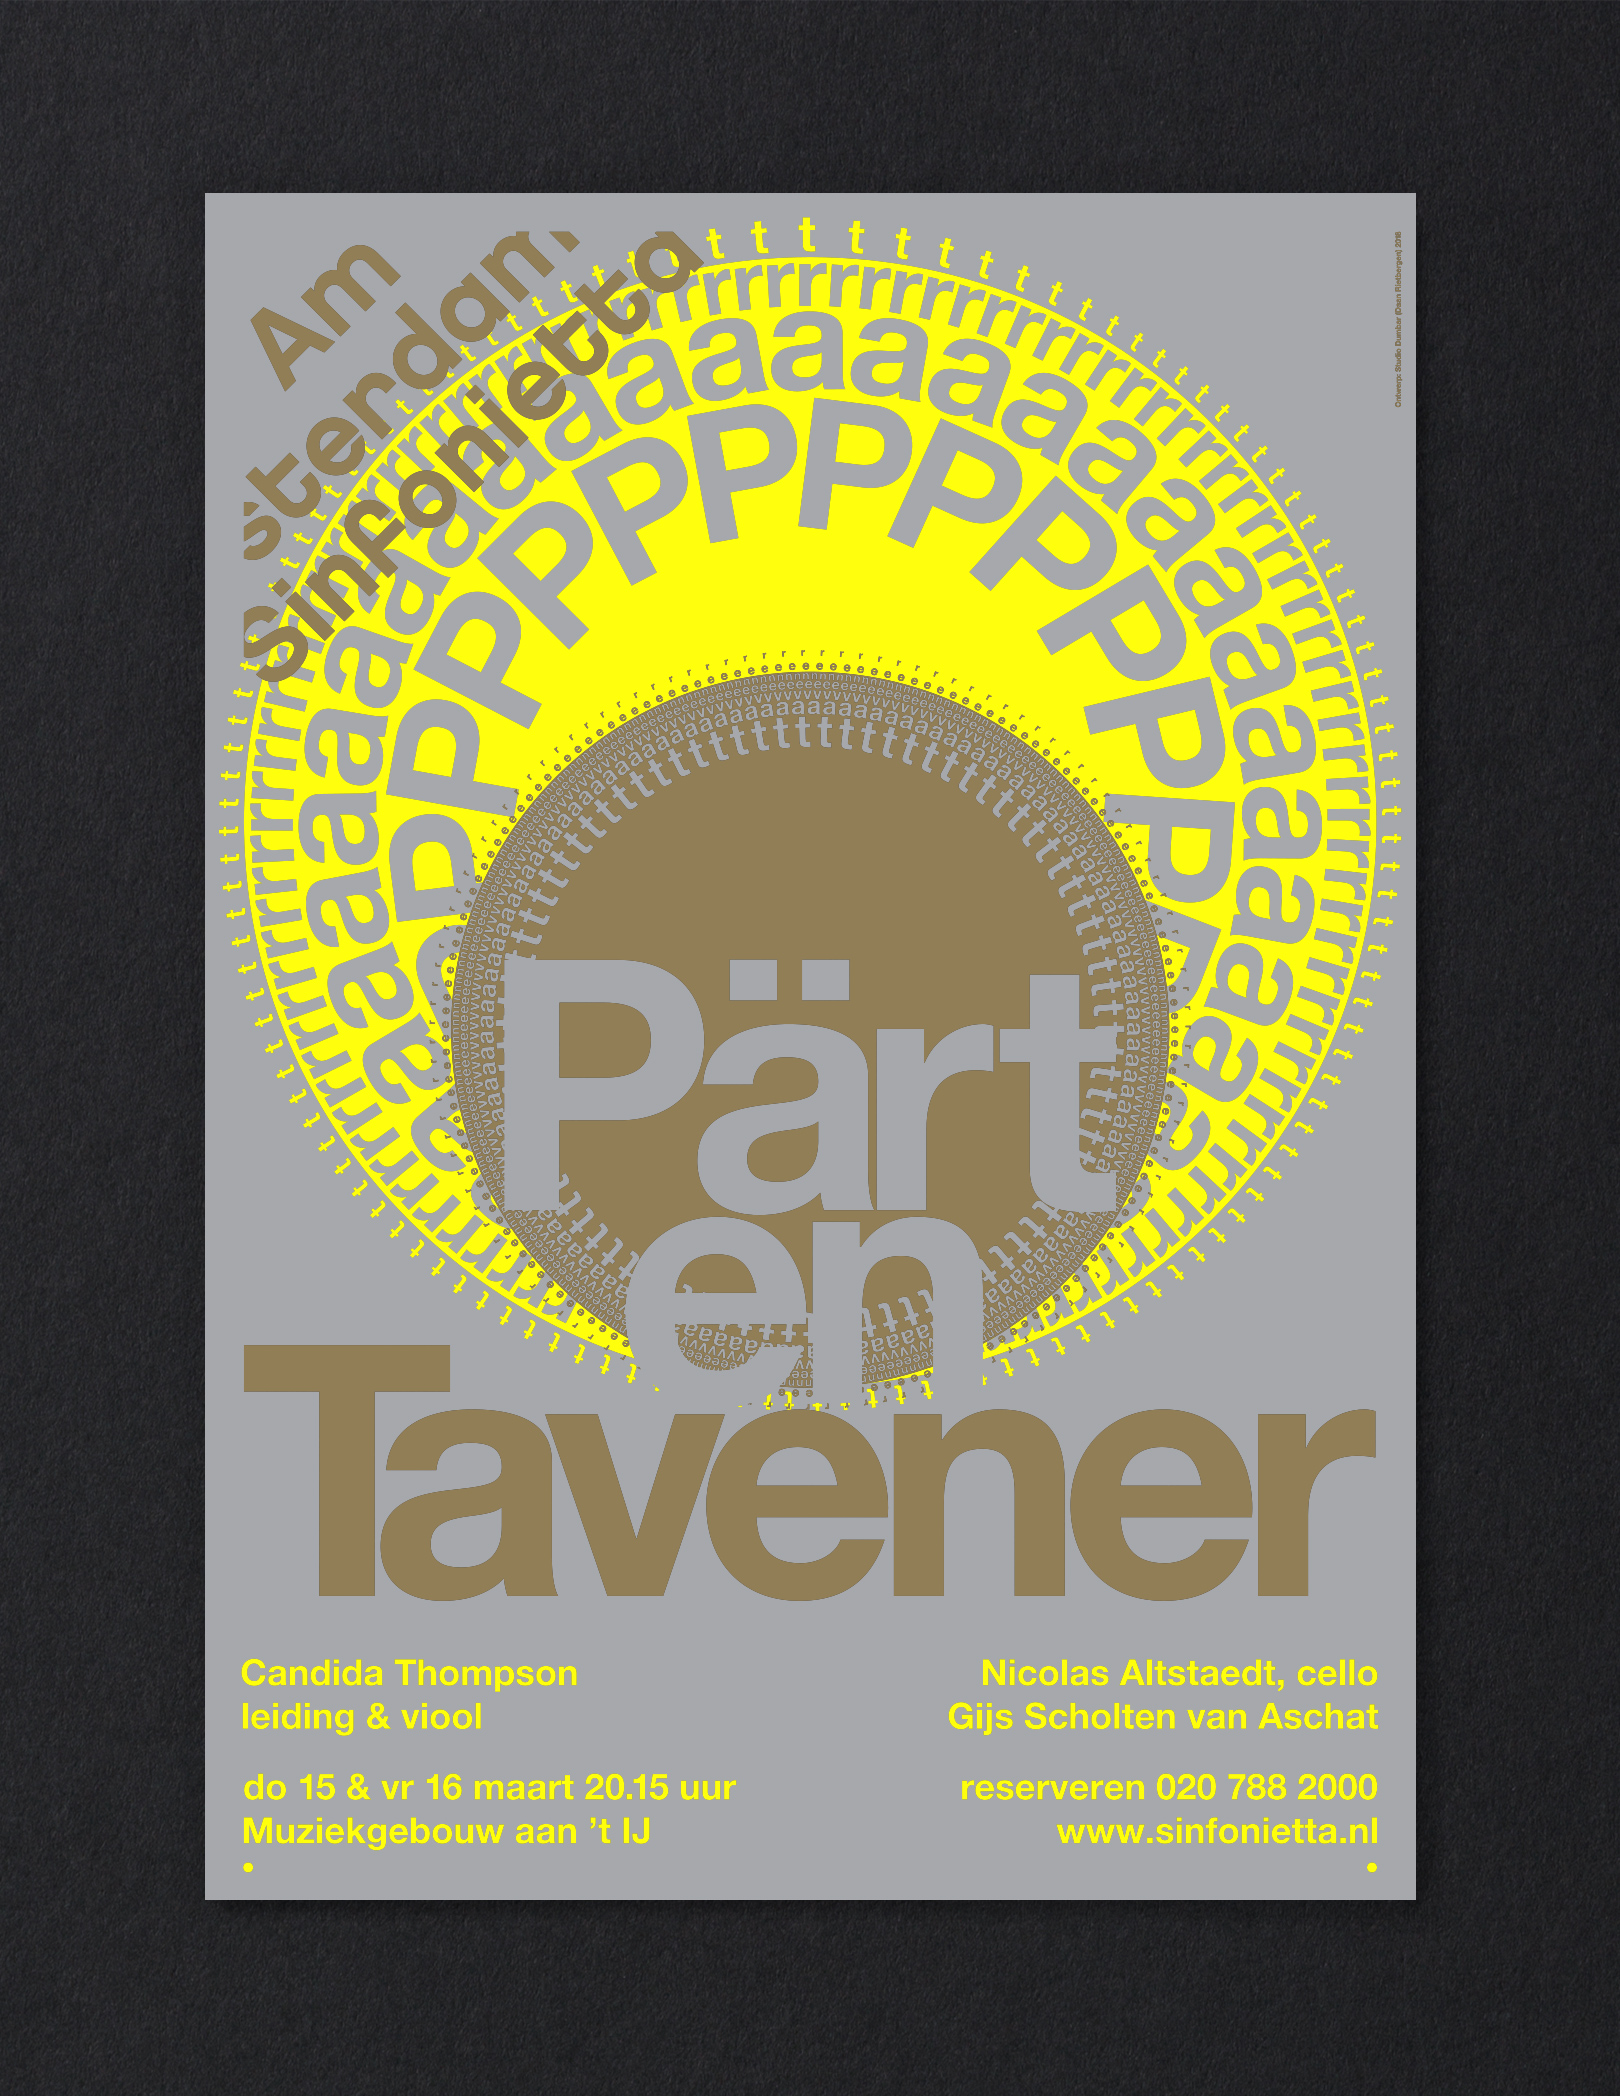 Amsterdam Sinfonietta Posters Part en Tavener